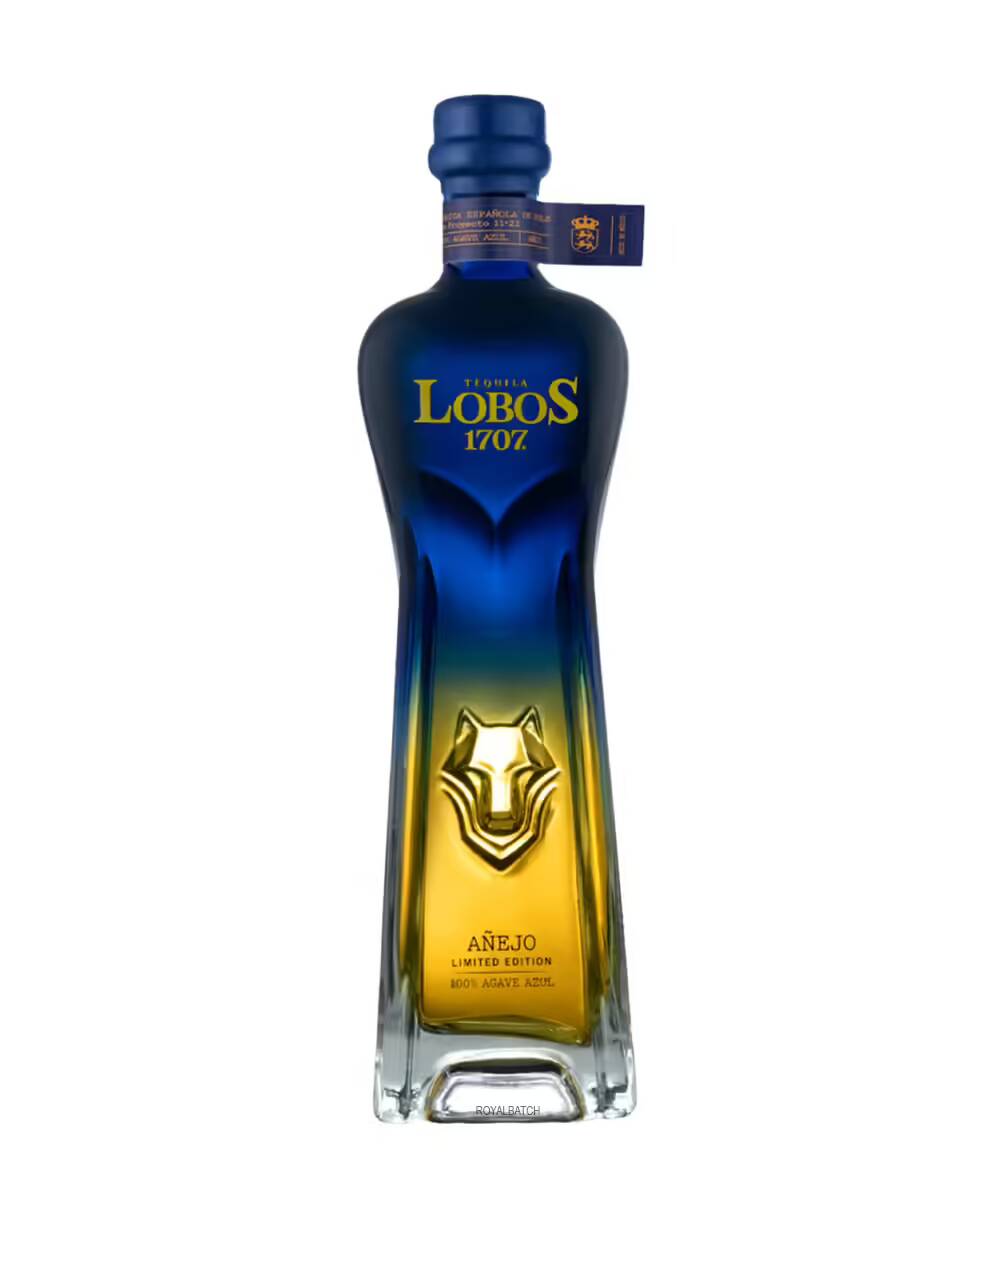 Lobos 1707 LeBron James Limited Edition Anejo Tequila